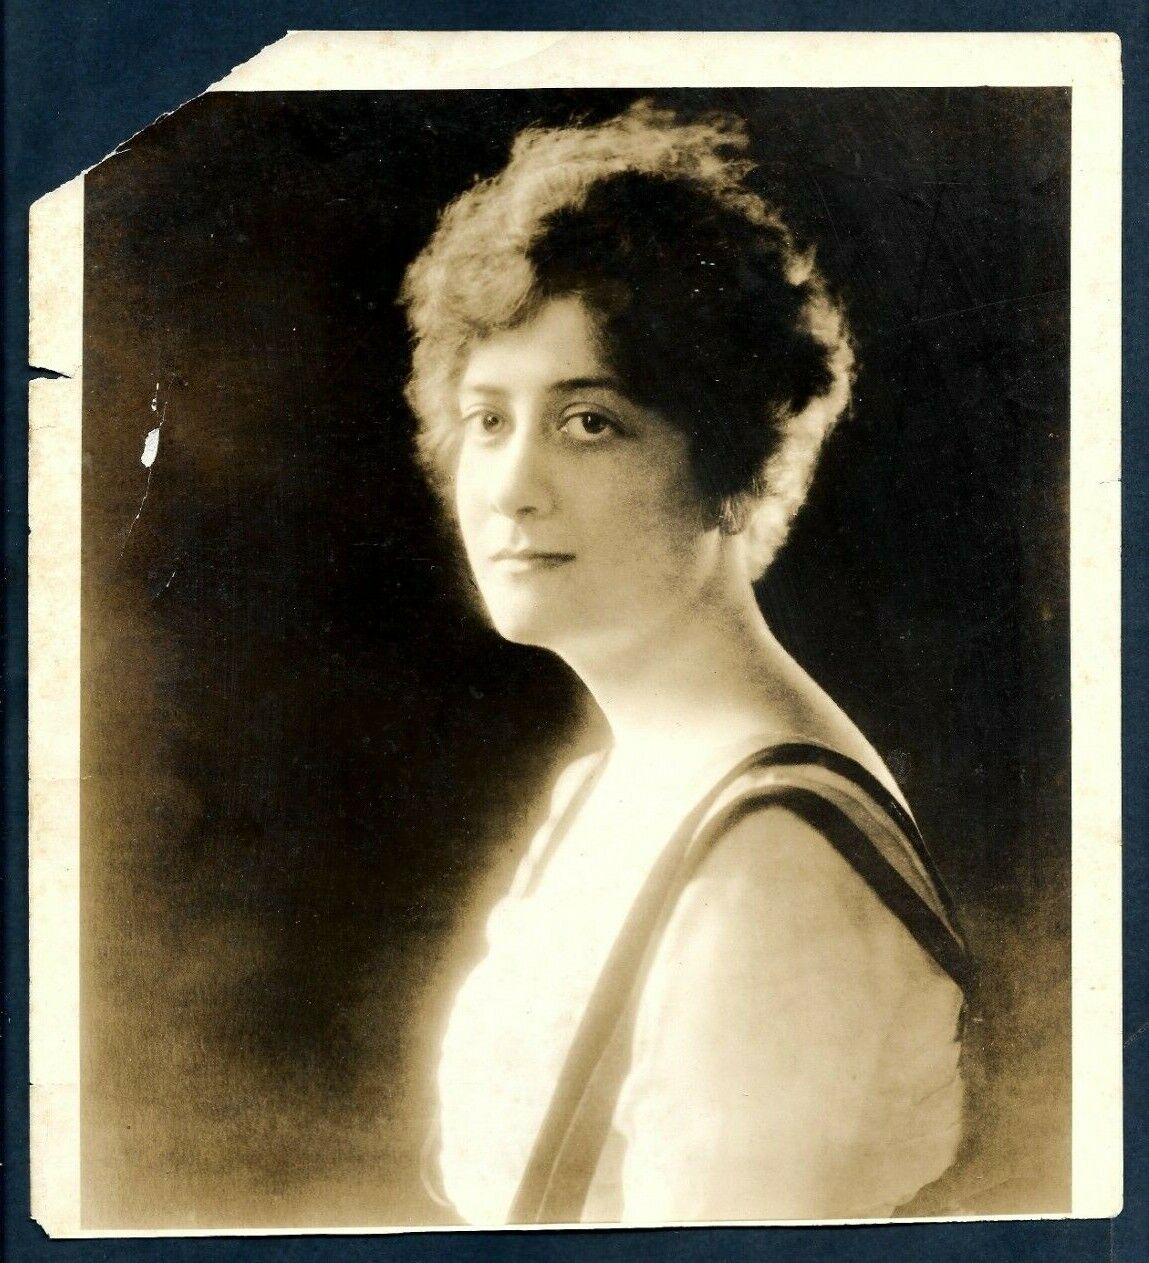 OUTSTANDING AMERICAN LIGHT SOPRANO HELEN WAITE 1920s VINTAGE ORIG Photo Y 199